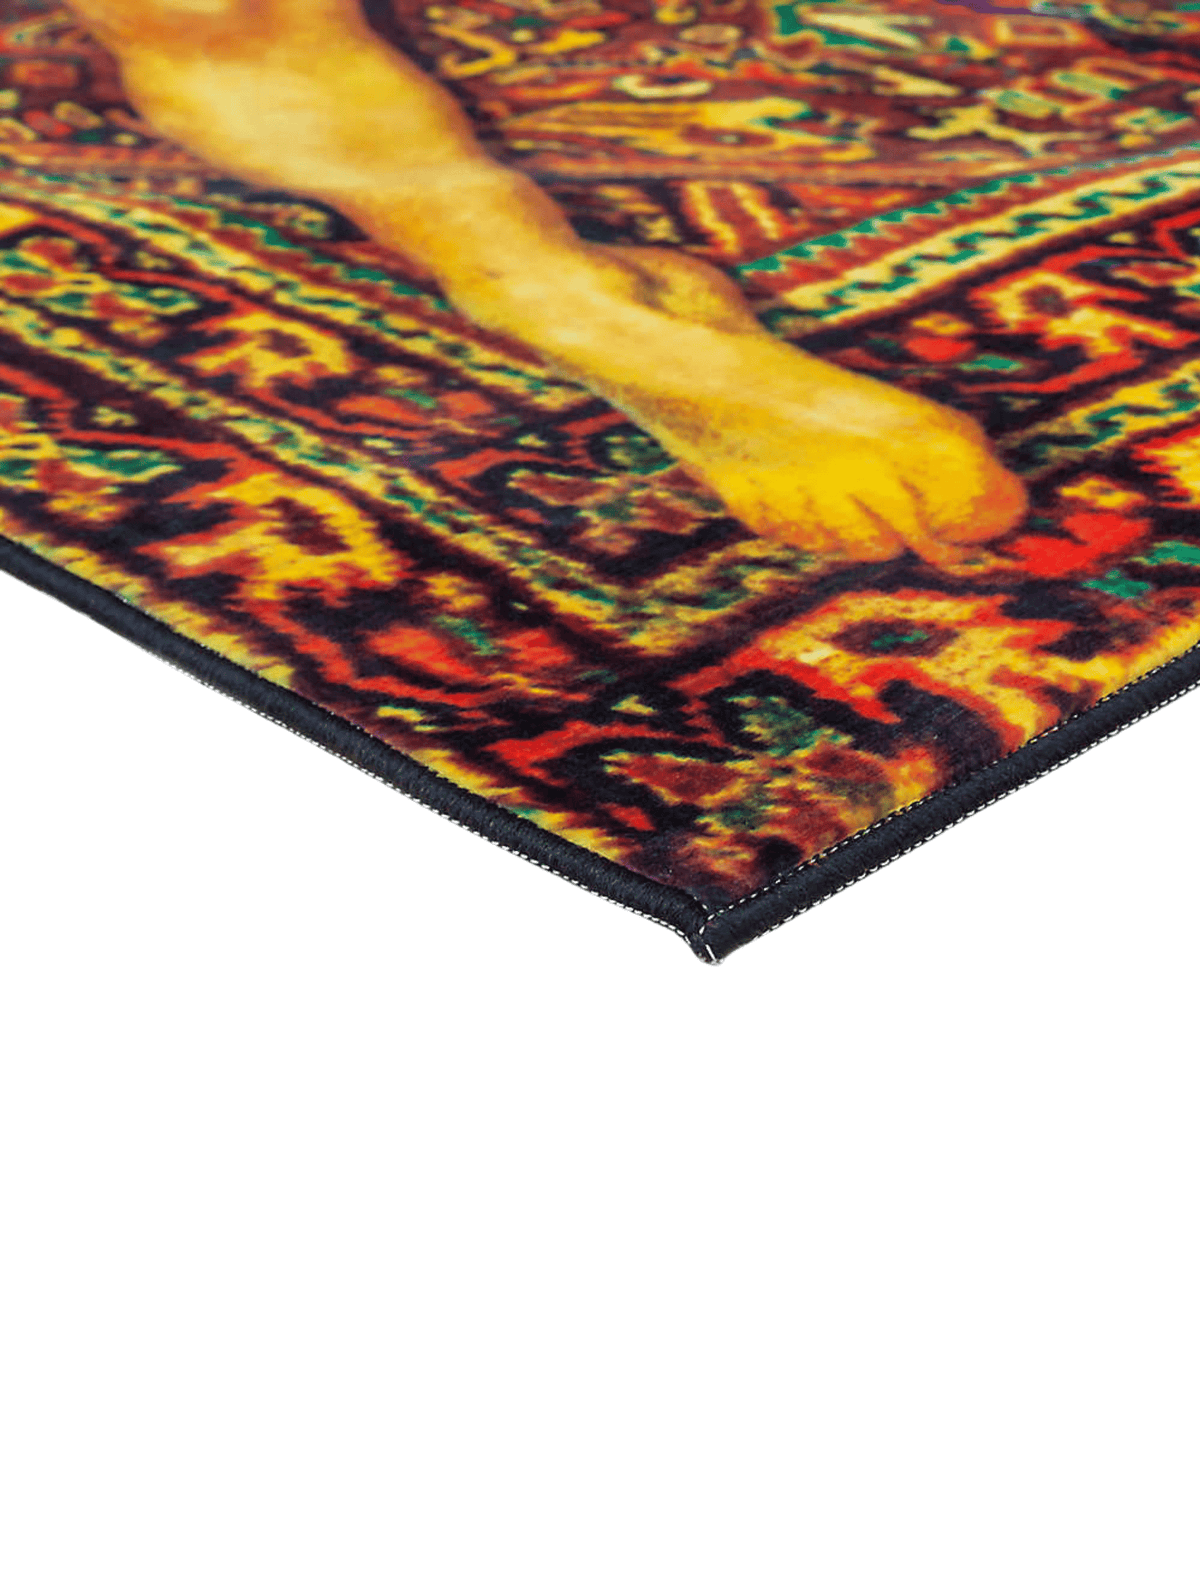 Lady on Carpet - Woven Rug Seletti 